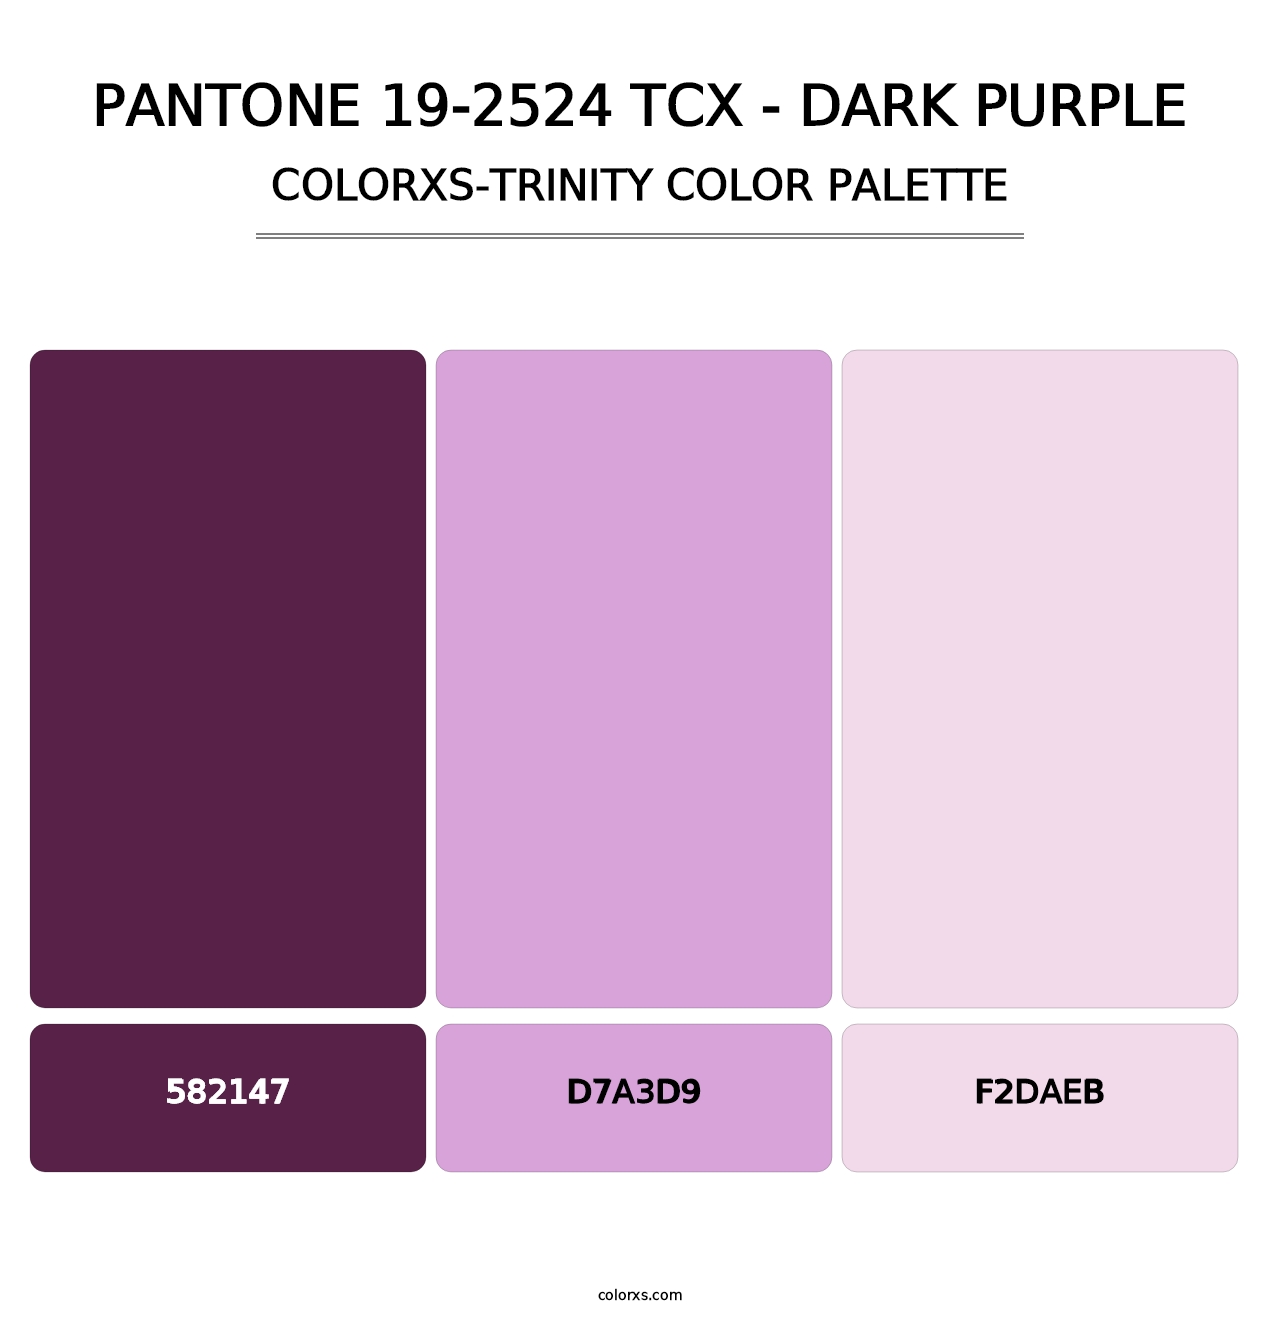 PANTONE 19-2524 TCX - Dark Purple - Colorxs Trinity Palette